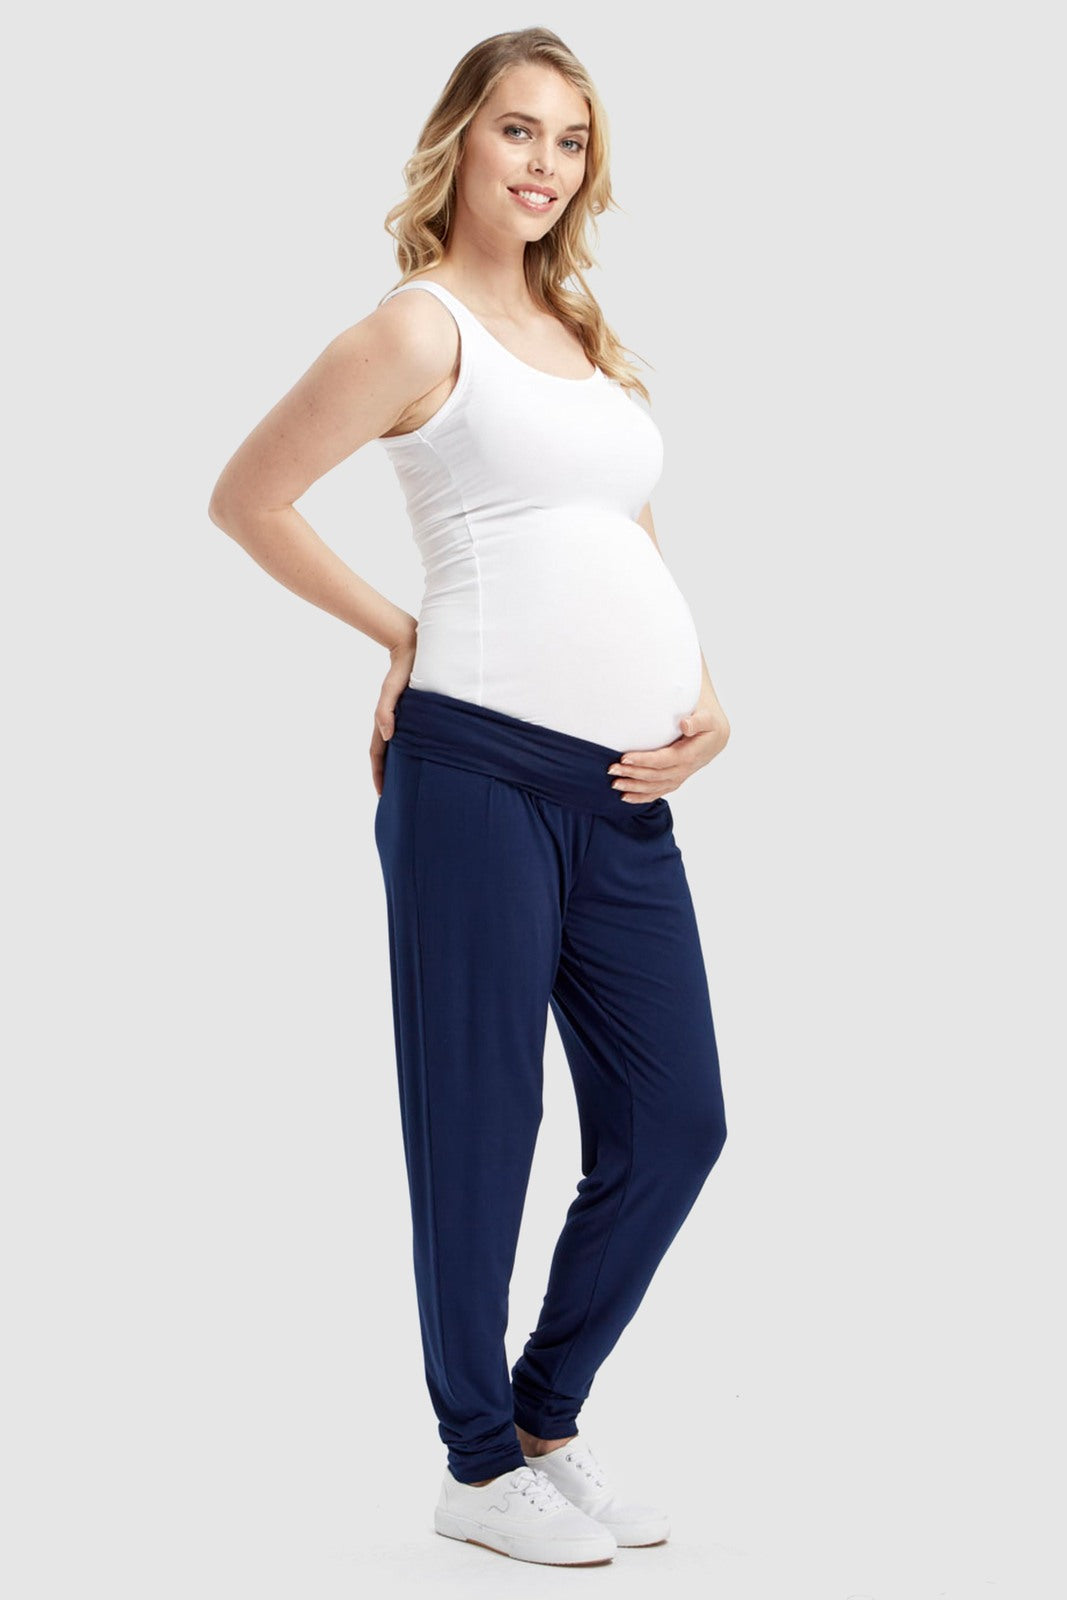 Organic Bamboo Maternity Slouch Pants Pants from Bamboo Body maternity online store brisbane sydney perth australia